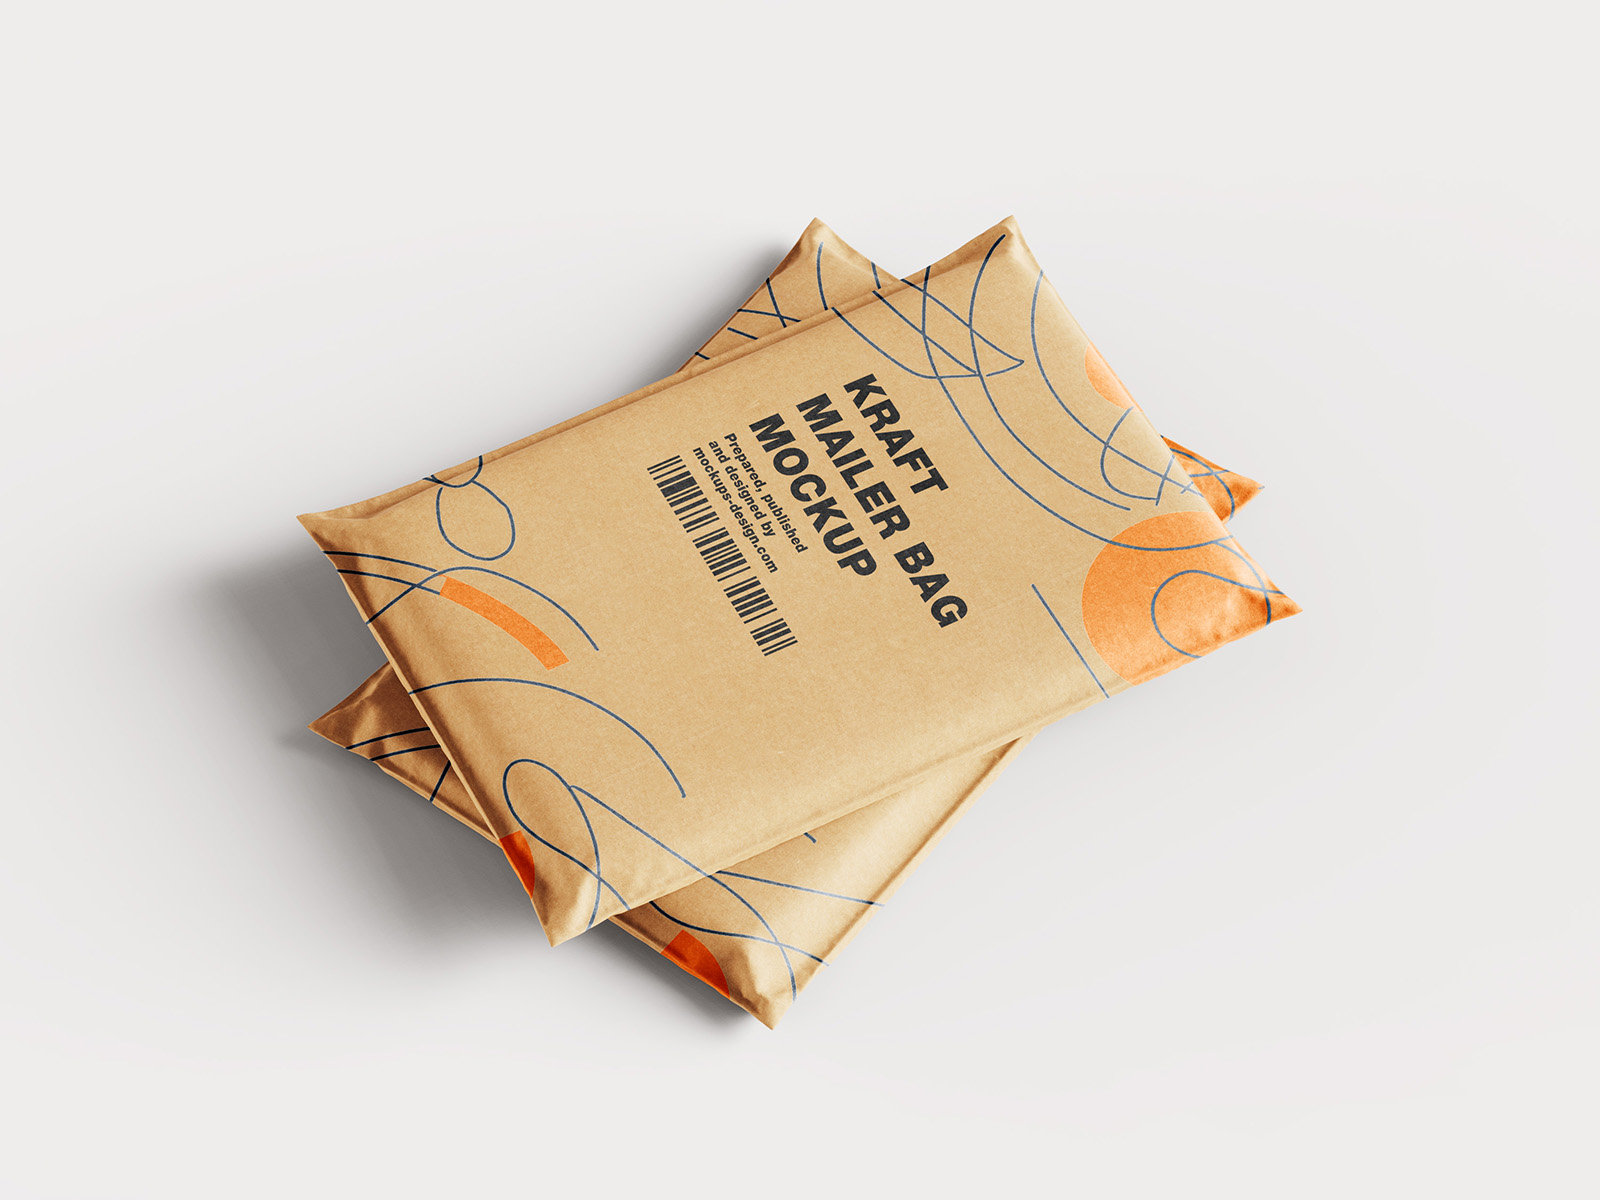 4 Mockups of Kraft Paper Mailing Bag FREE PSD